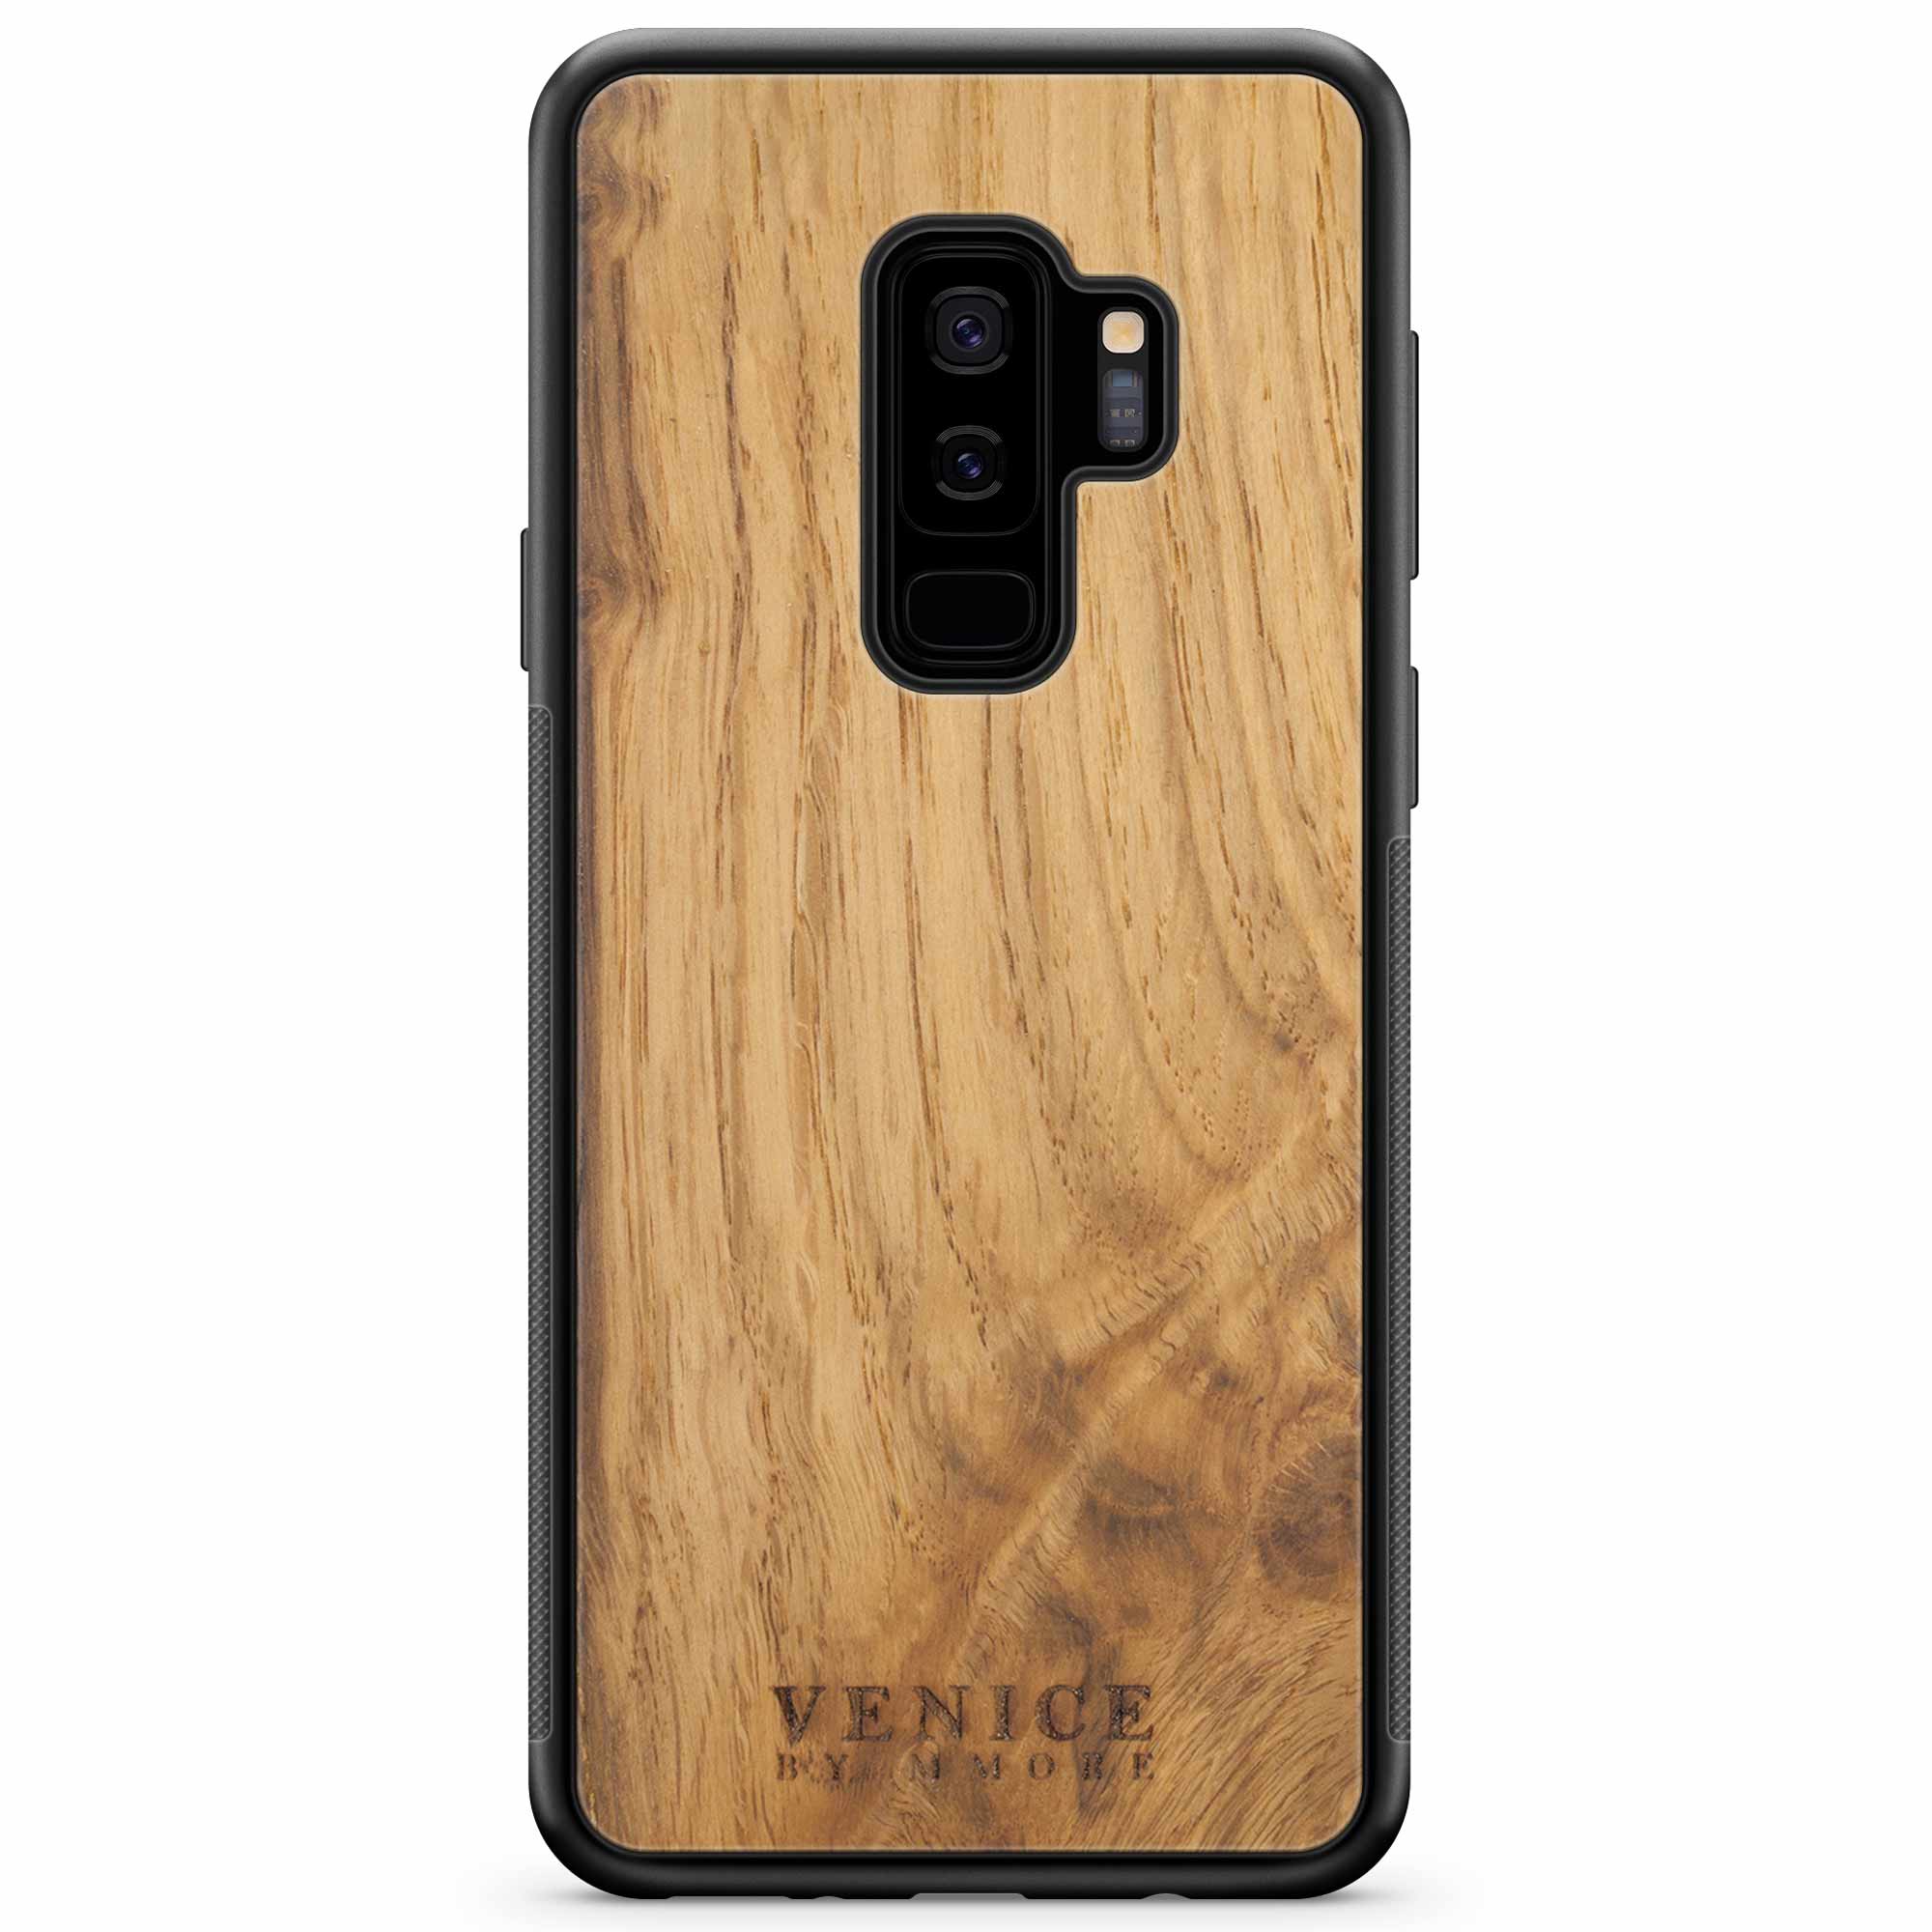 Samsung S9 Plus Holz Handyhülle mit Venedig Schriftzug